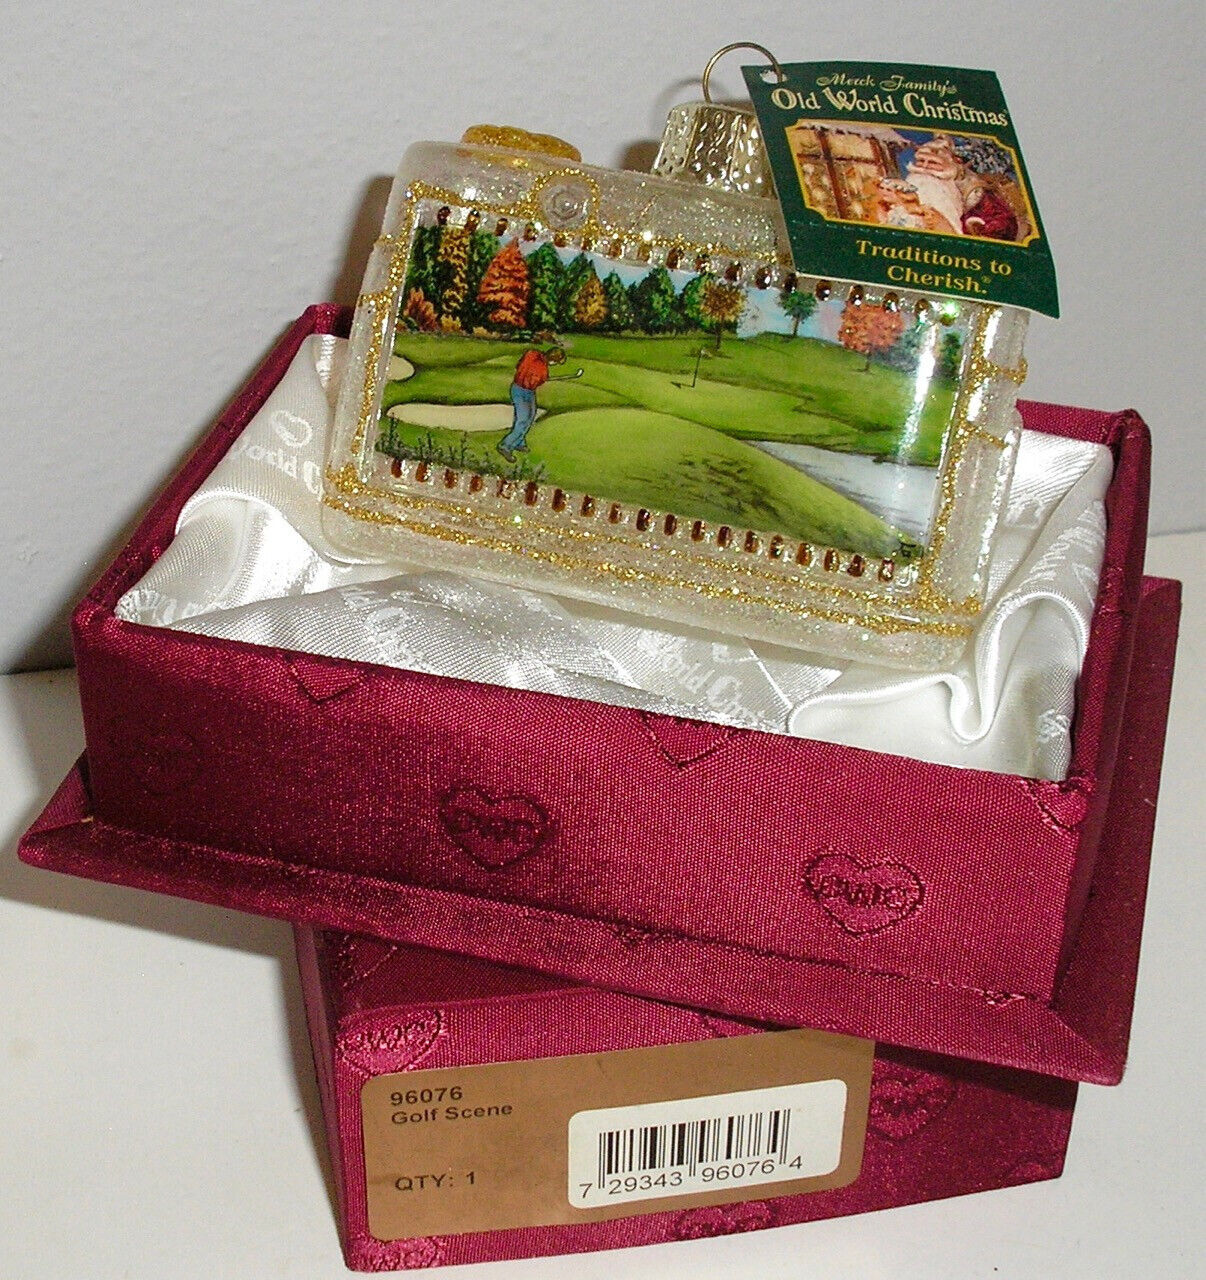 2004 OLD WORLD CHRISTMAS INSIDE ART - CAMERA GOLF SCENE - GLASS ORNAMENT IN BOX